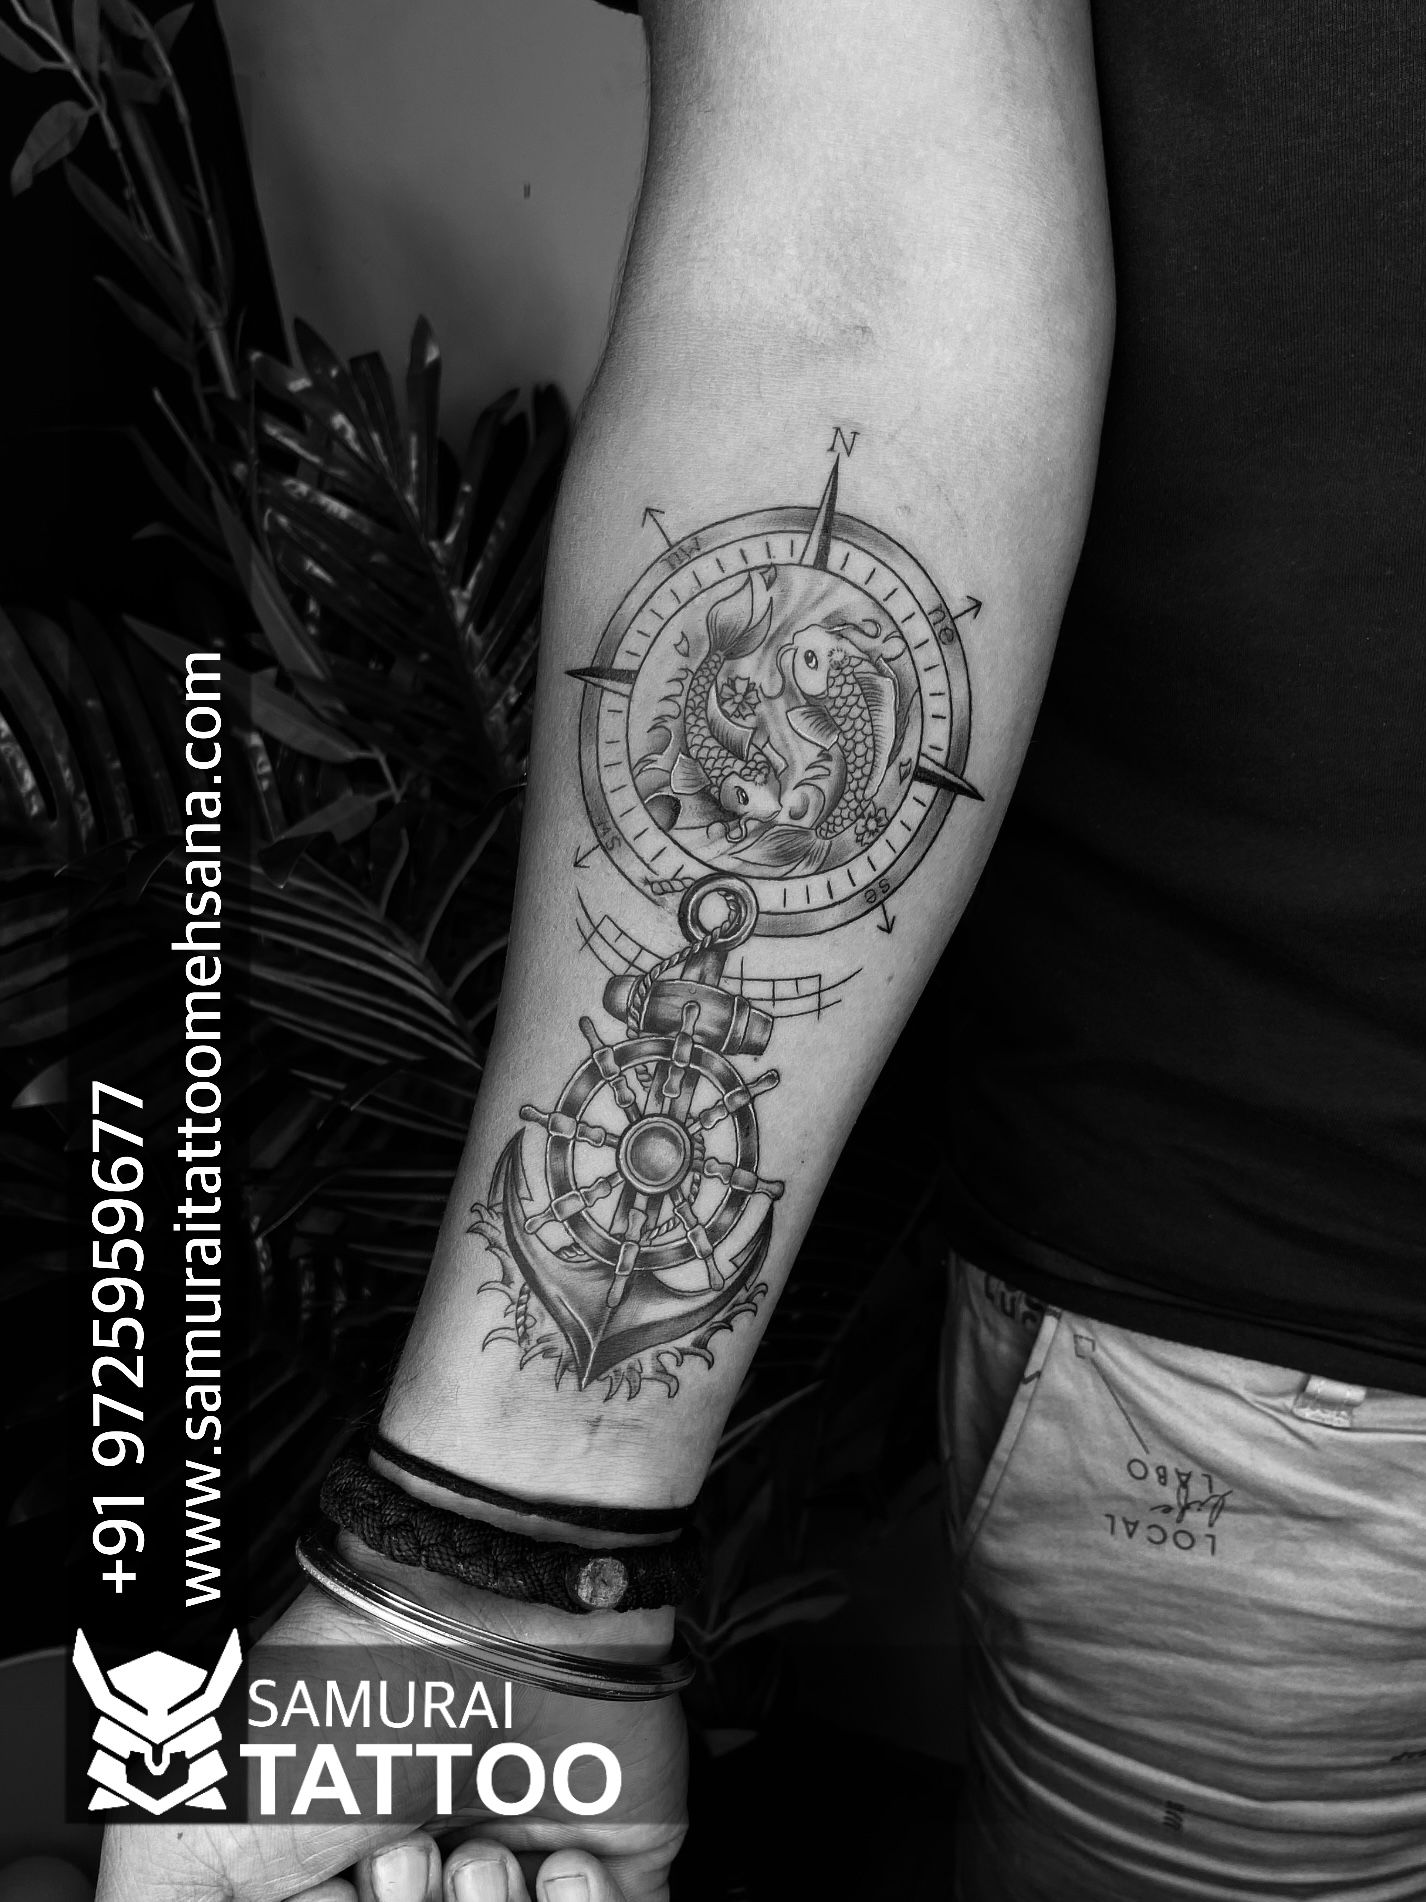 Tattoo uploaded by Vipul Chaudhary • Compass tattoo